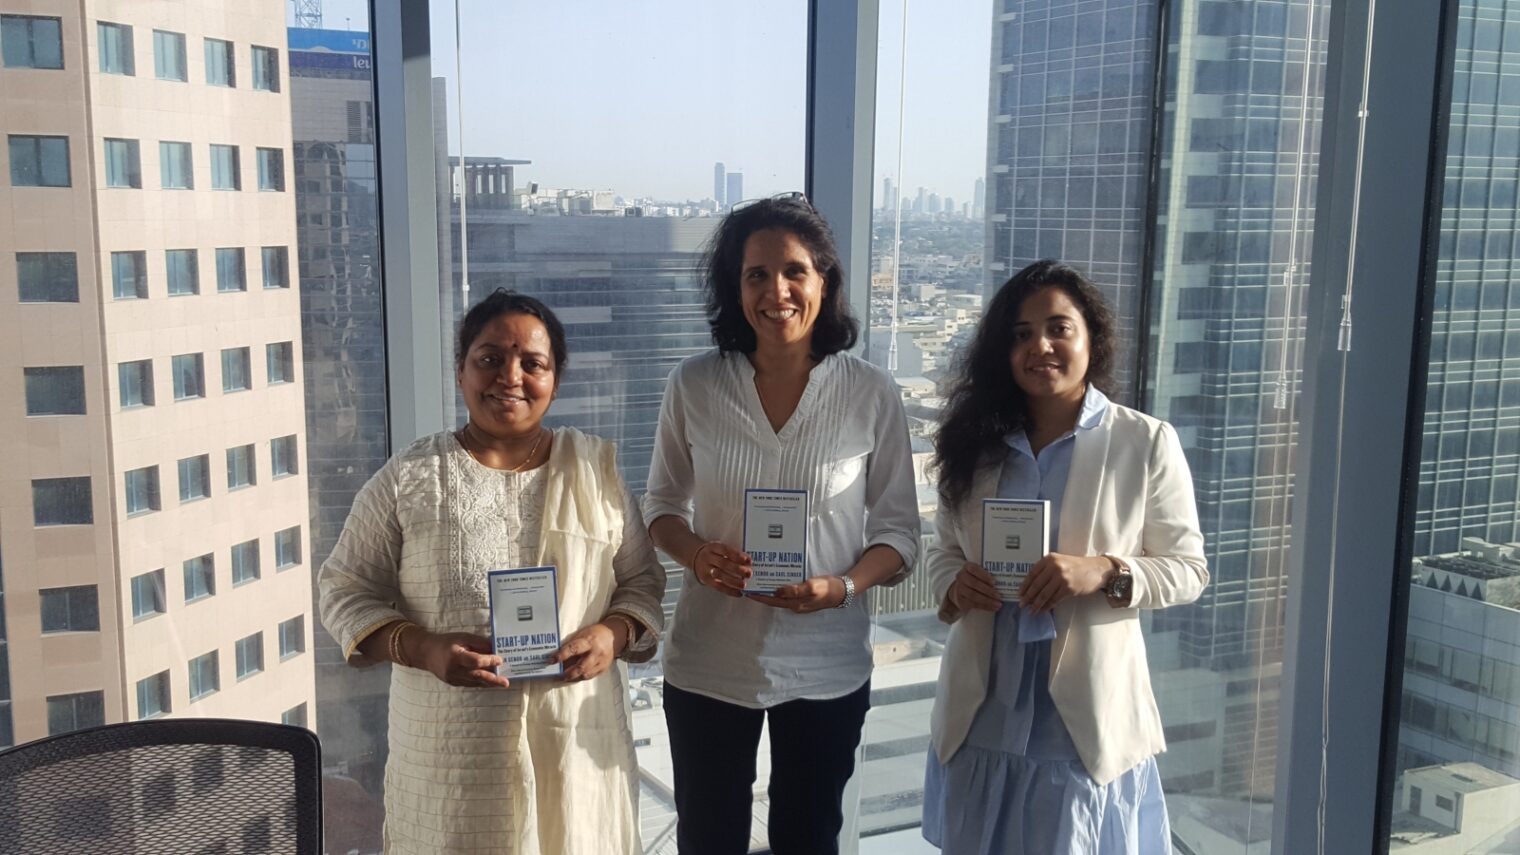 Peesapati Suseela Rani, Galit Zamler and Dr. Meghana Kambham in Tel Aviv. Photo: courtesy